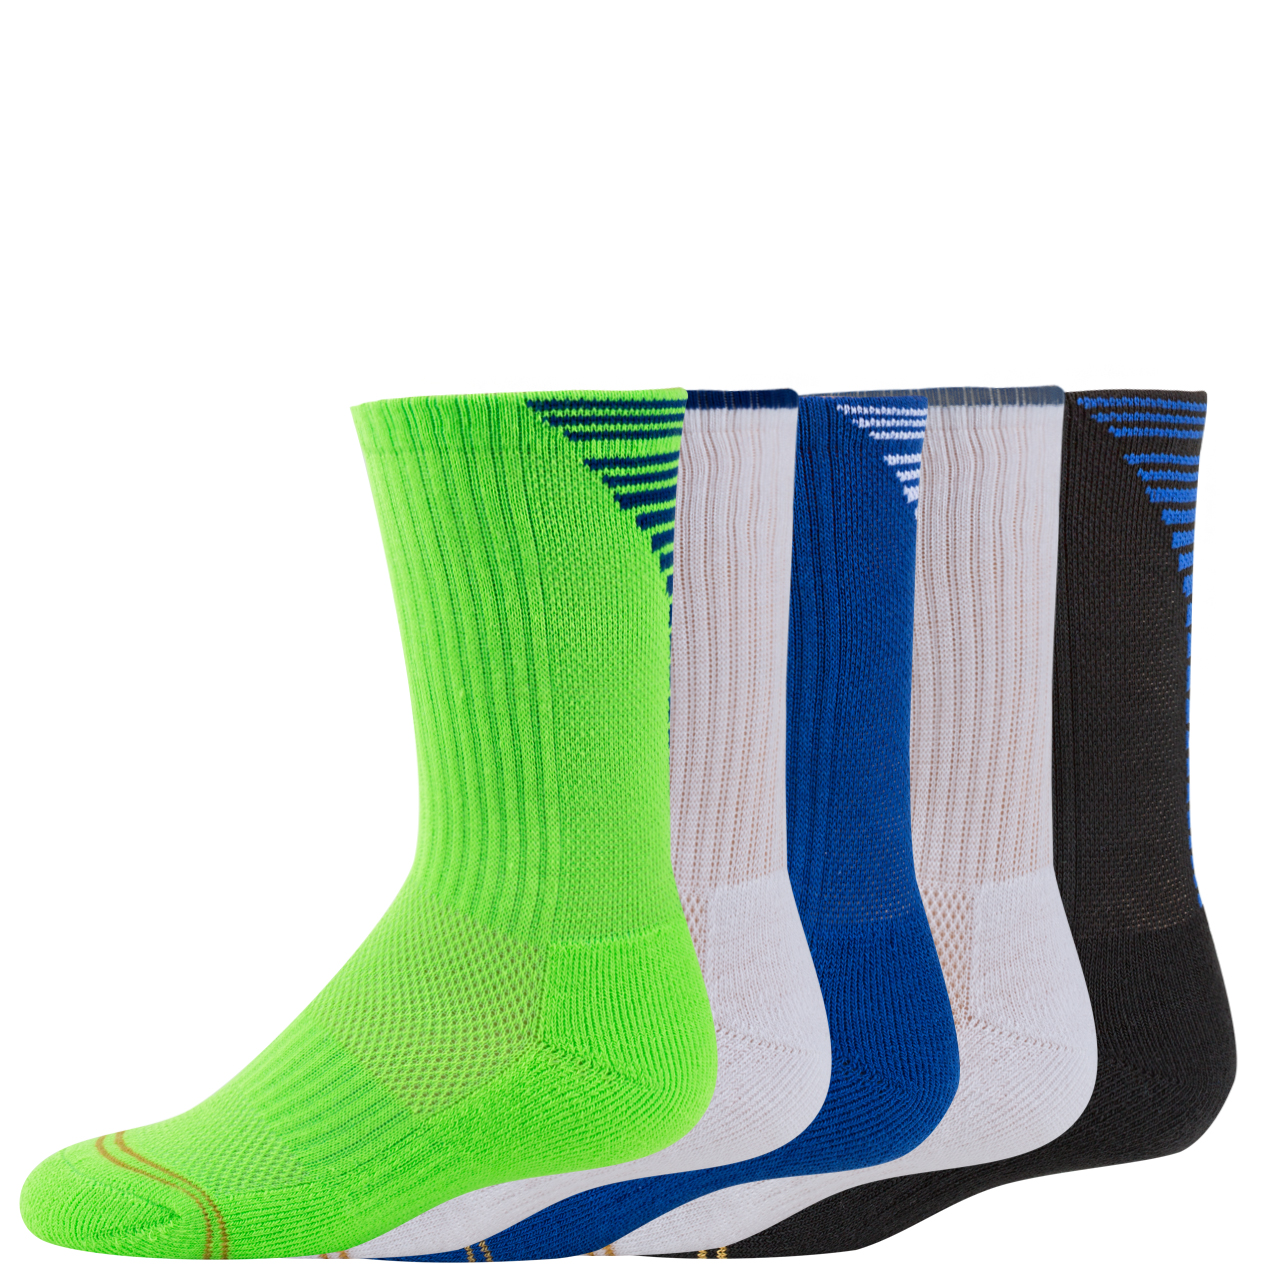 Gold Toe Socks Make Great Stocking Stuffers - Mom Blog Society